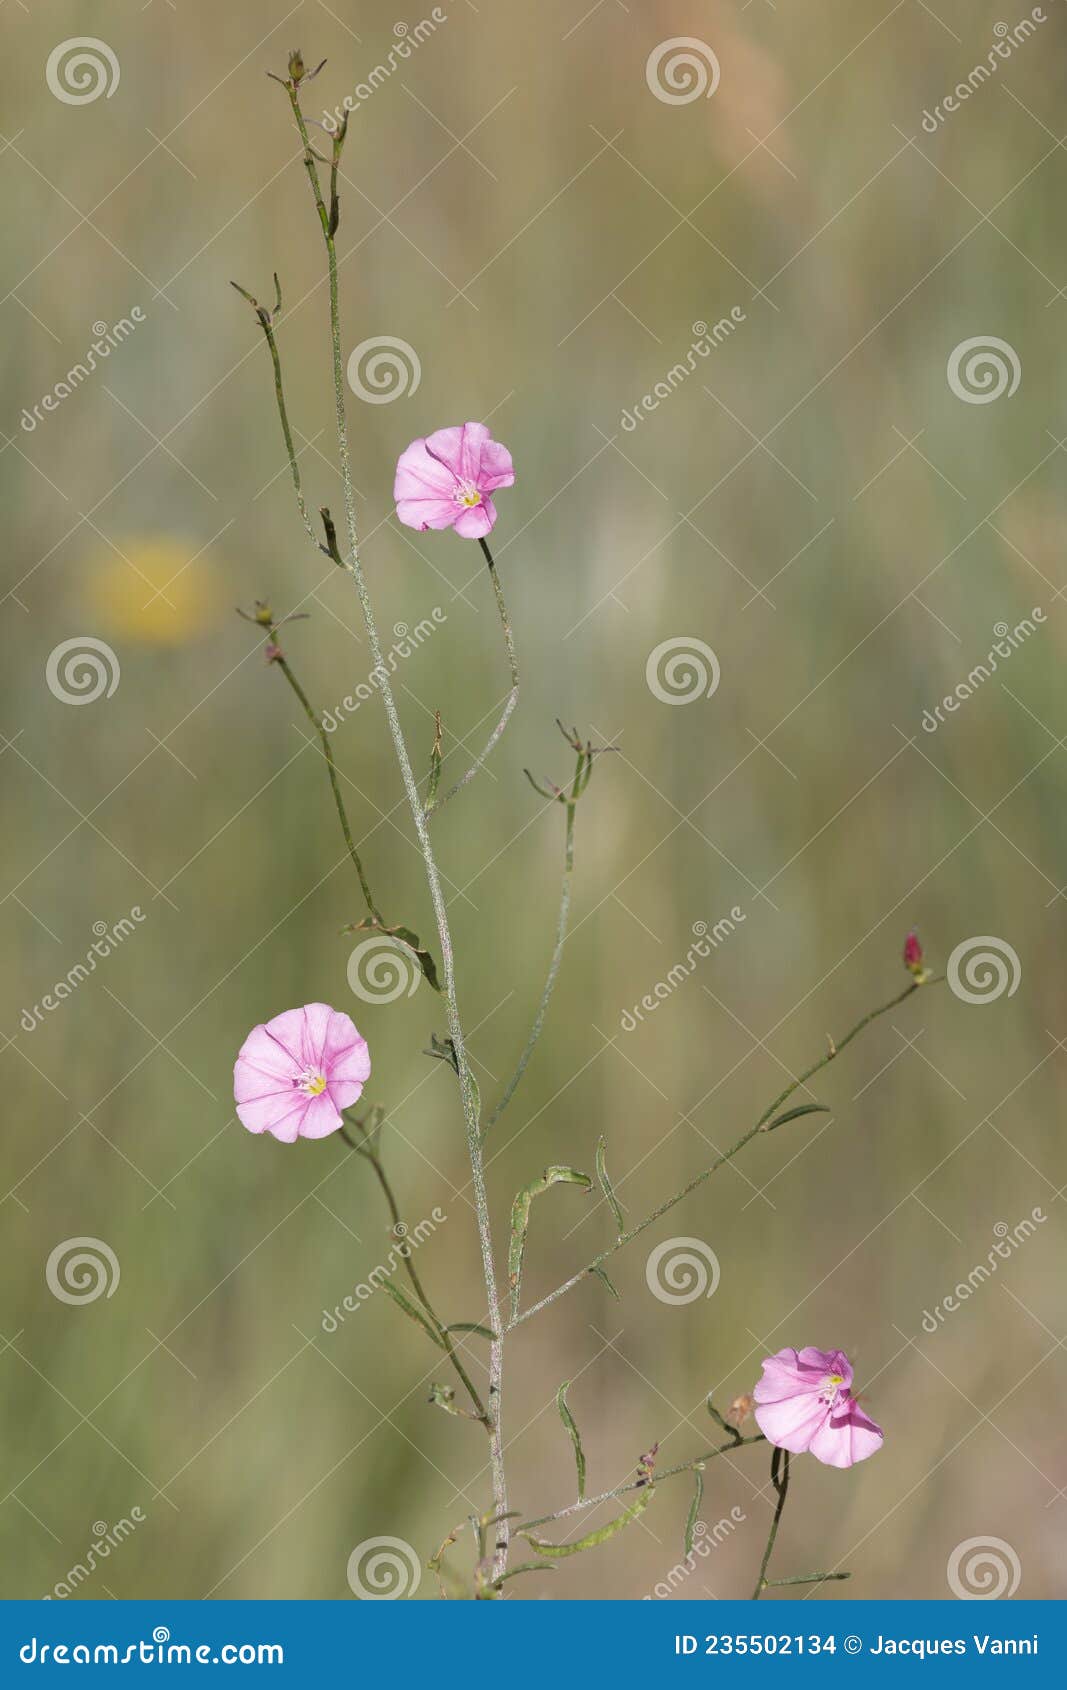 macro photography of a wild flower - convolvulus cantabrica